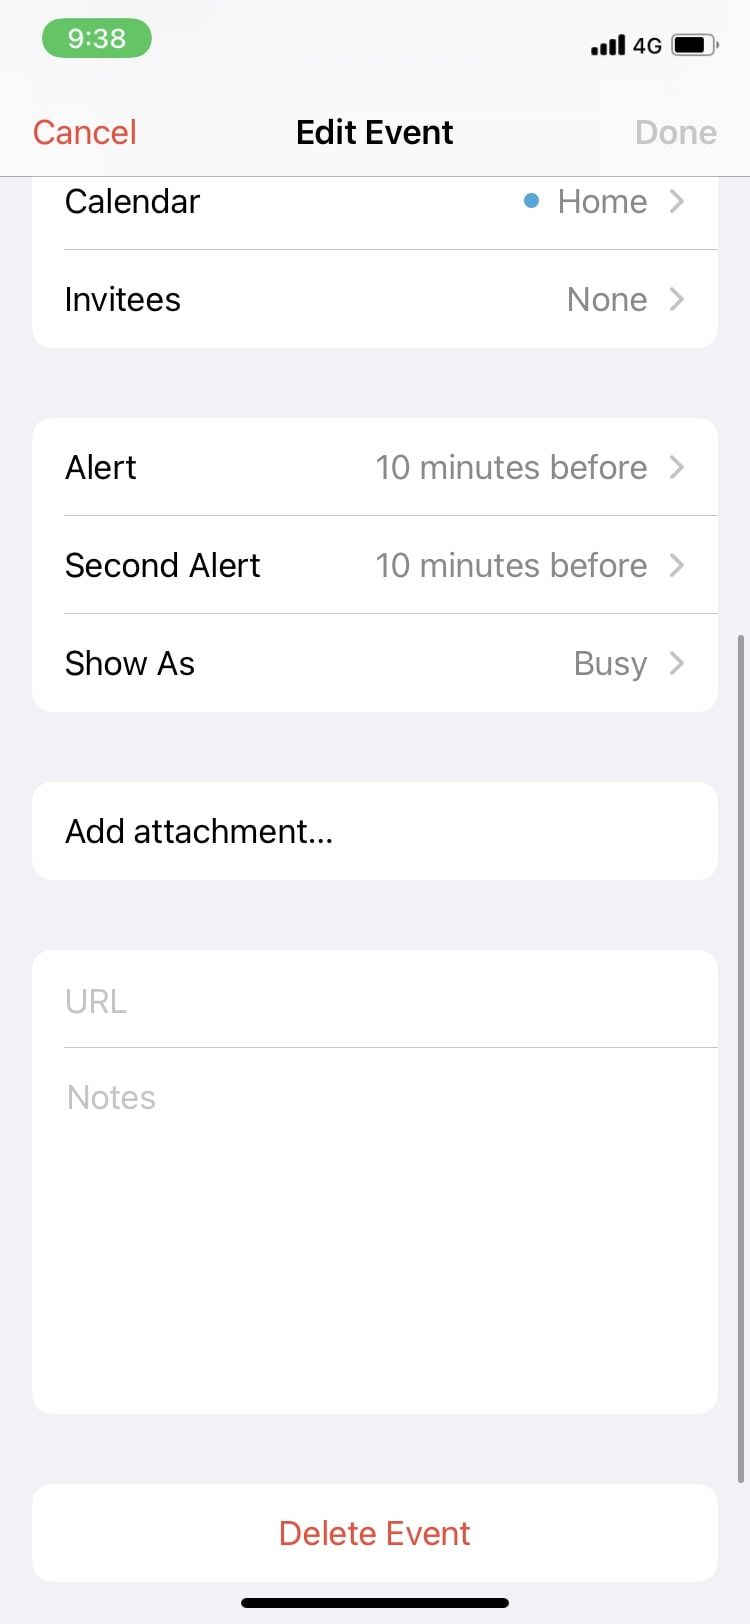 edit, alert, invitees, add attachment options